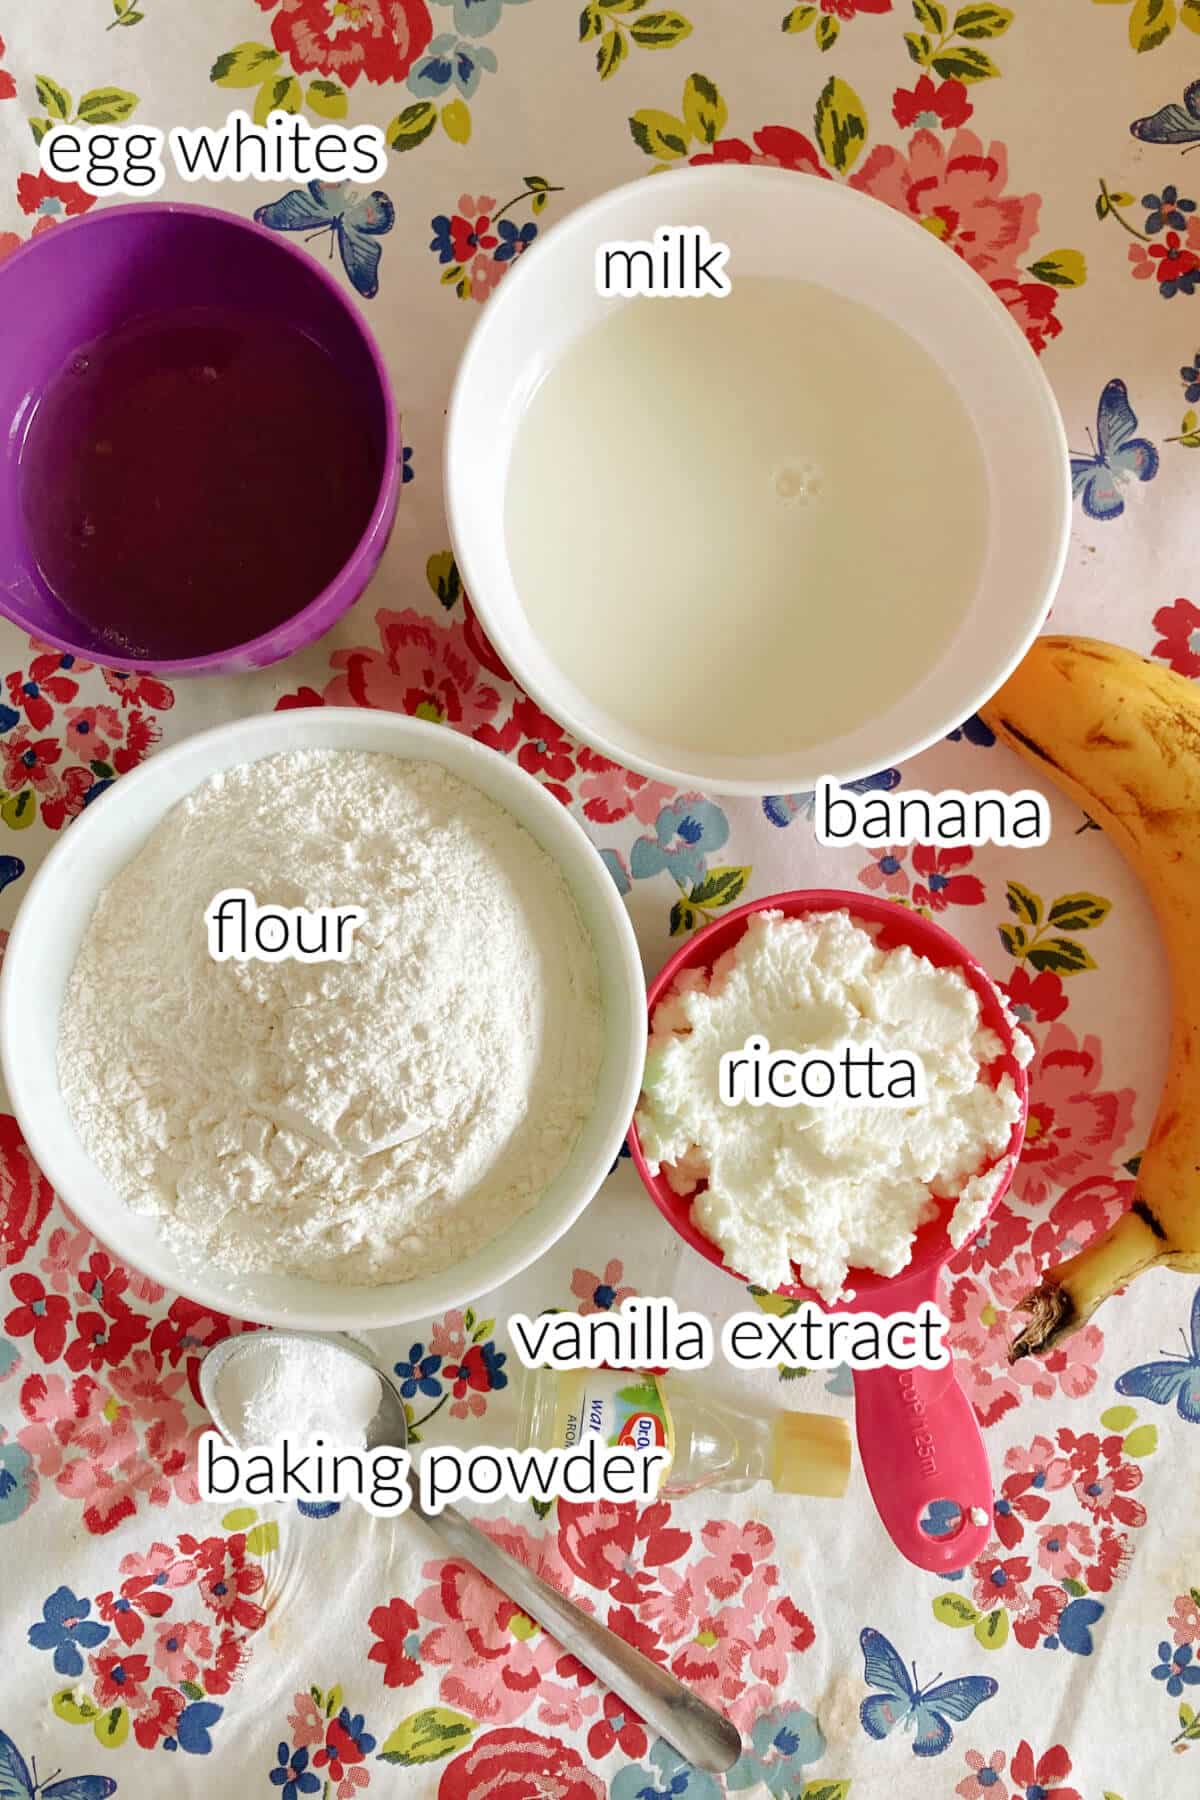 Ingredients needed to make pancakes